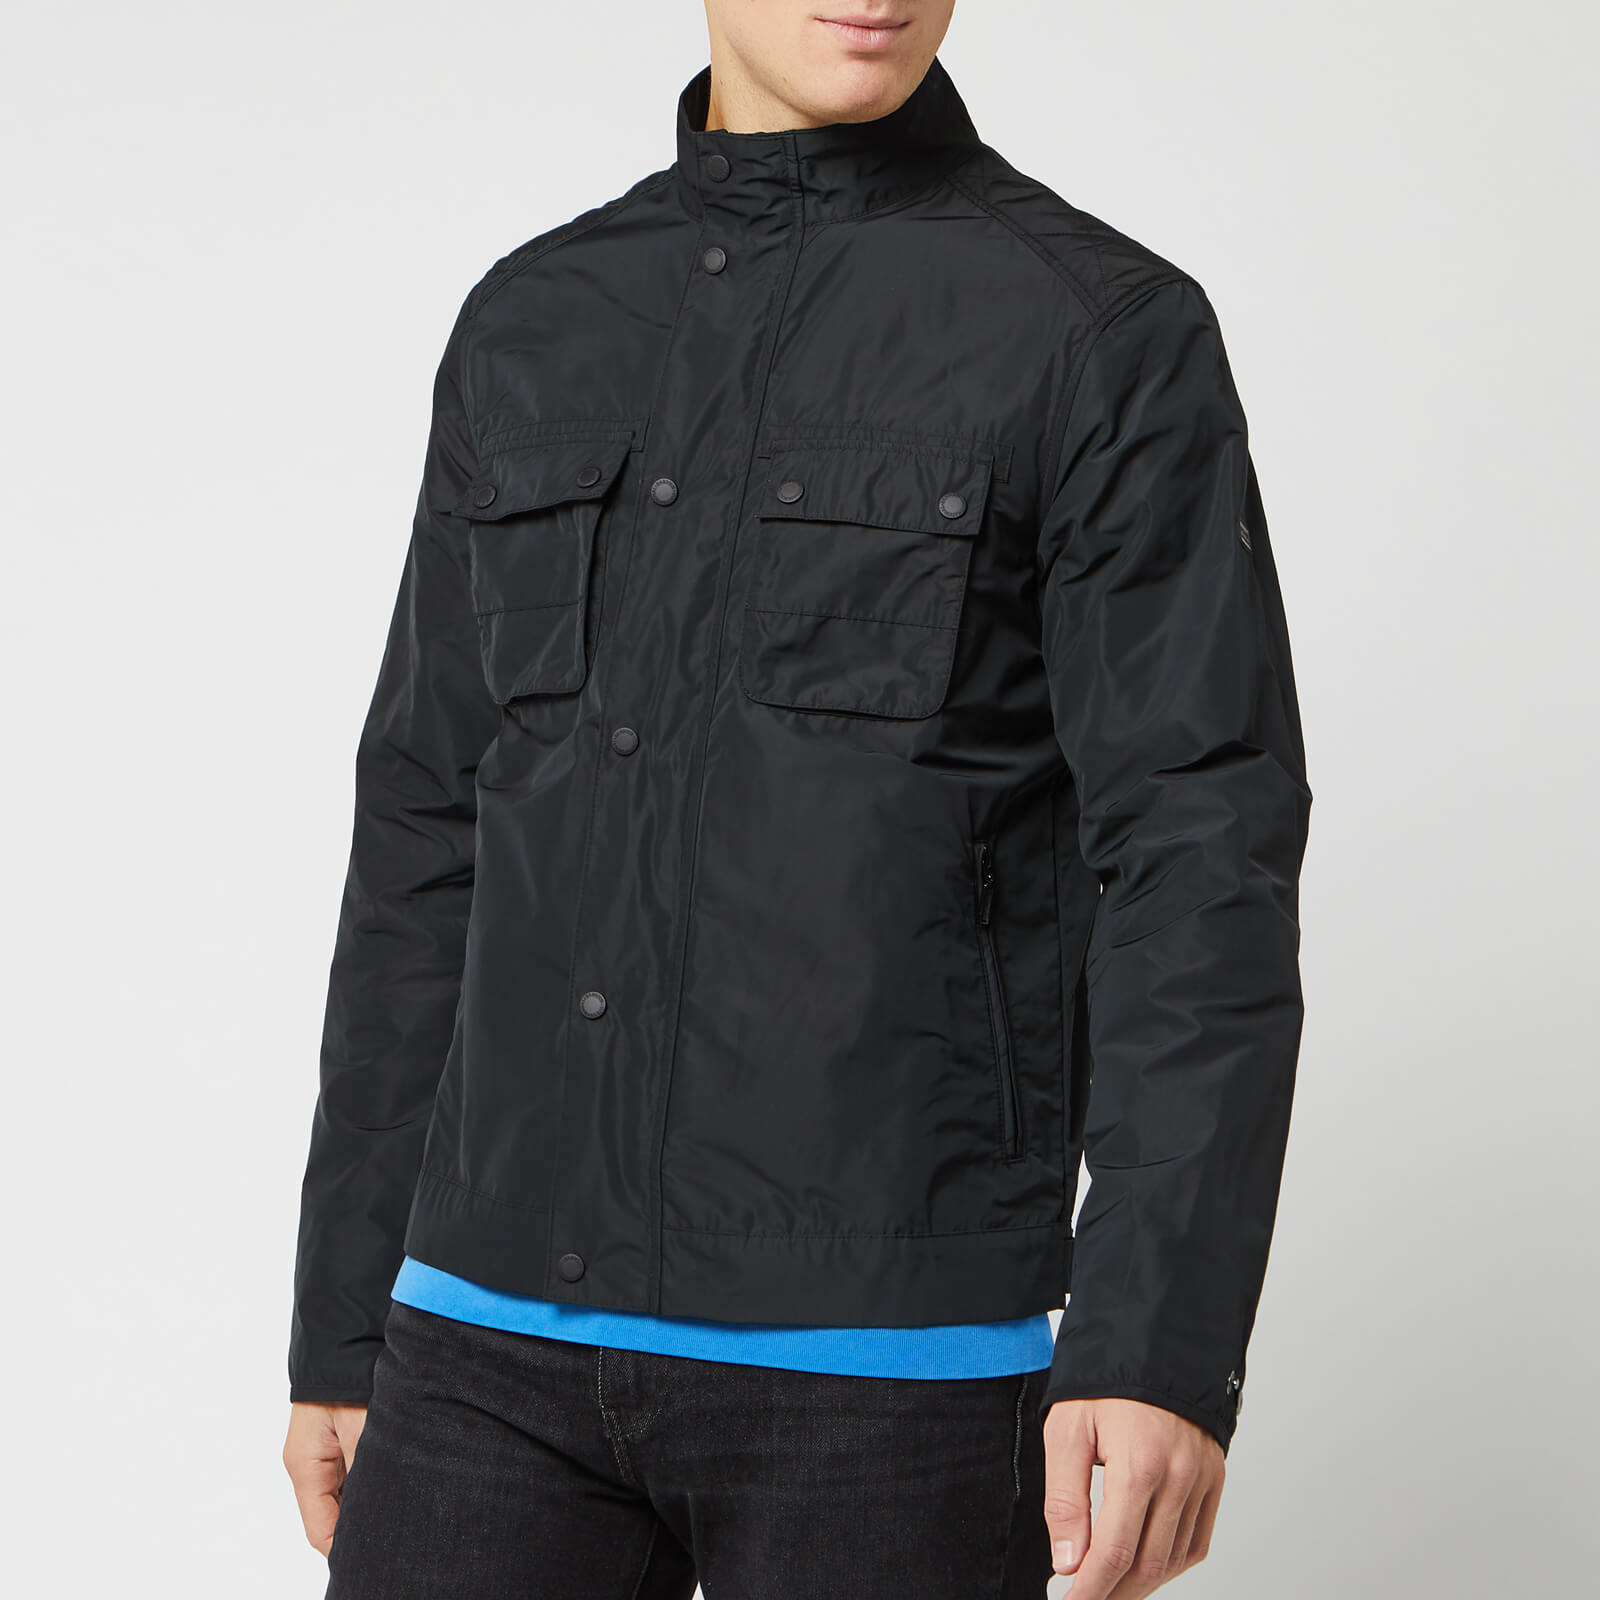 barbour stannington jacket black